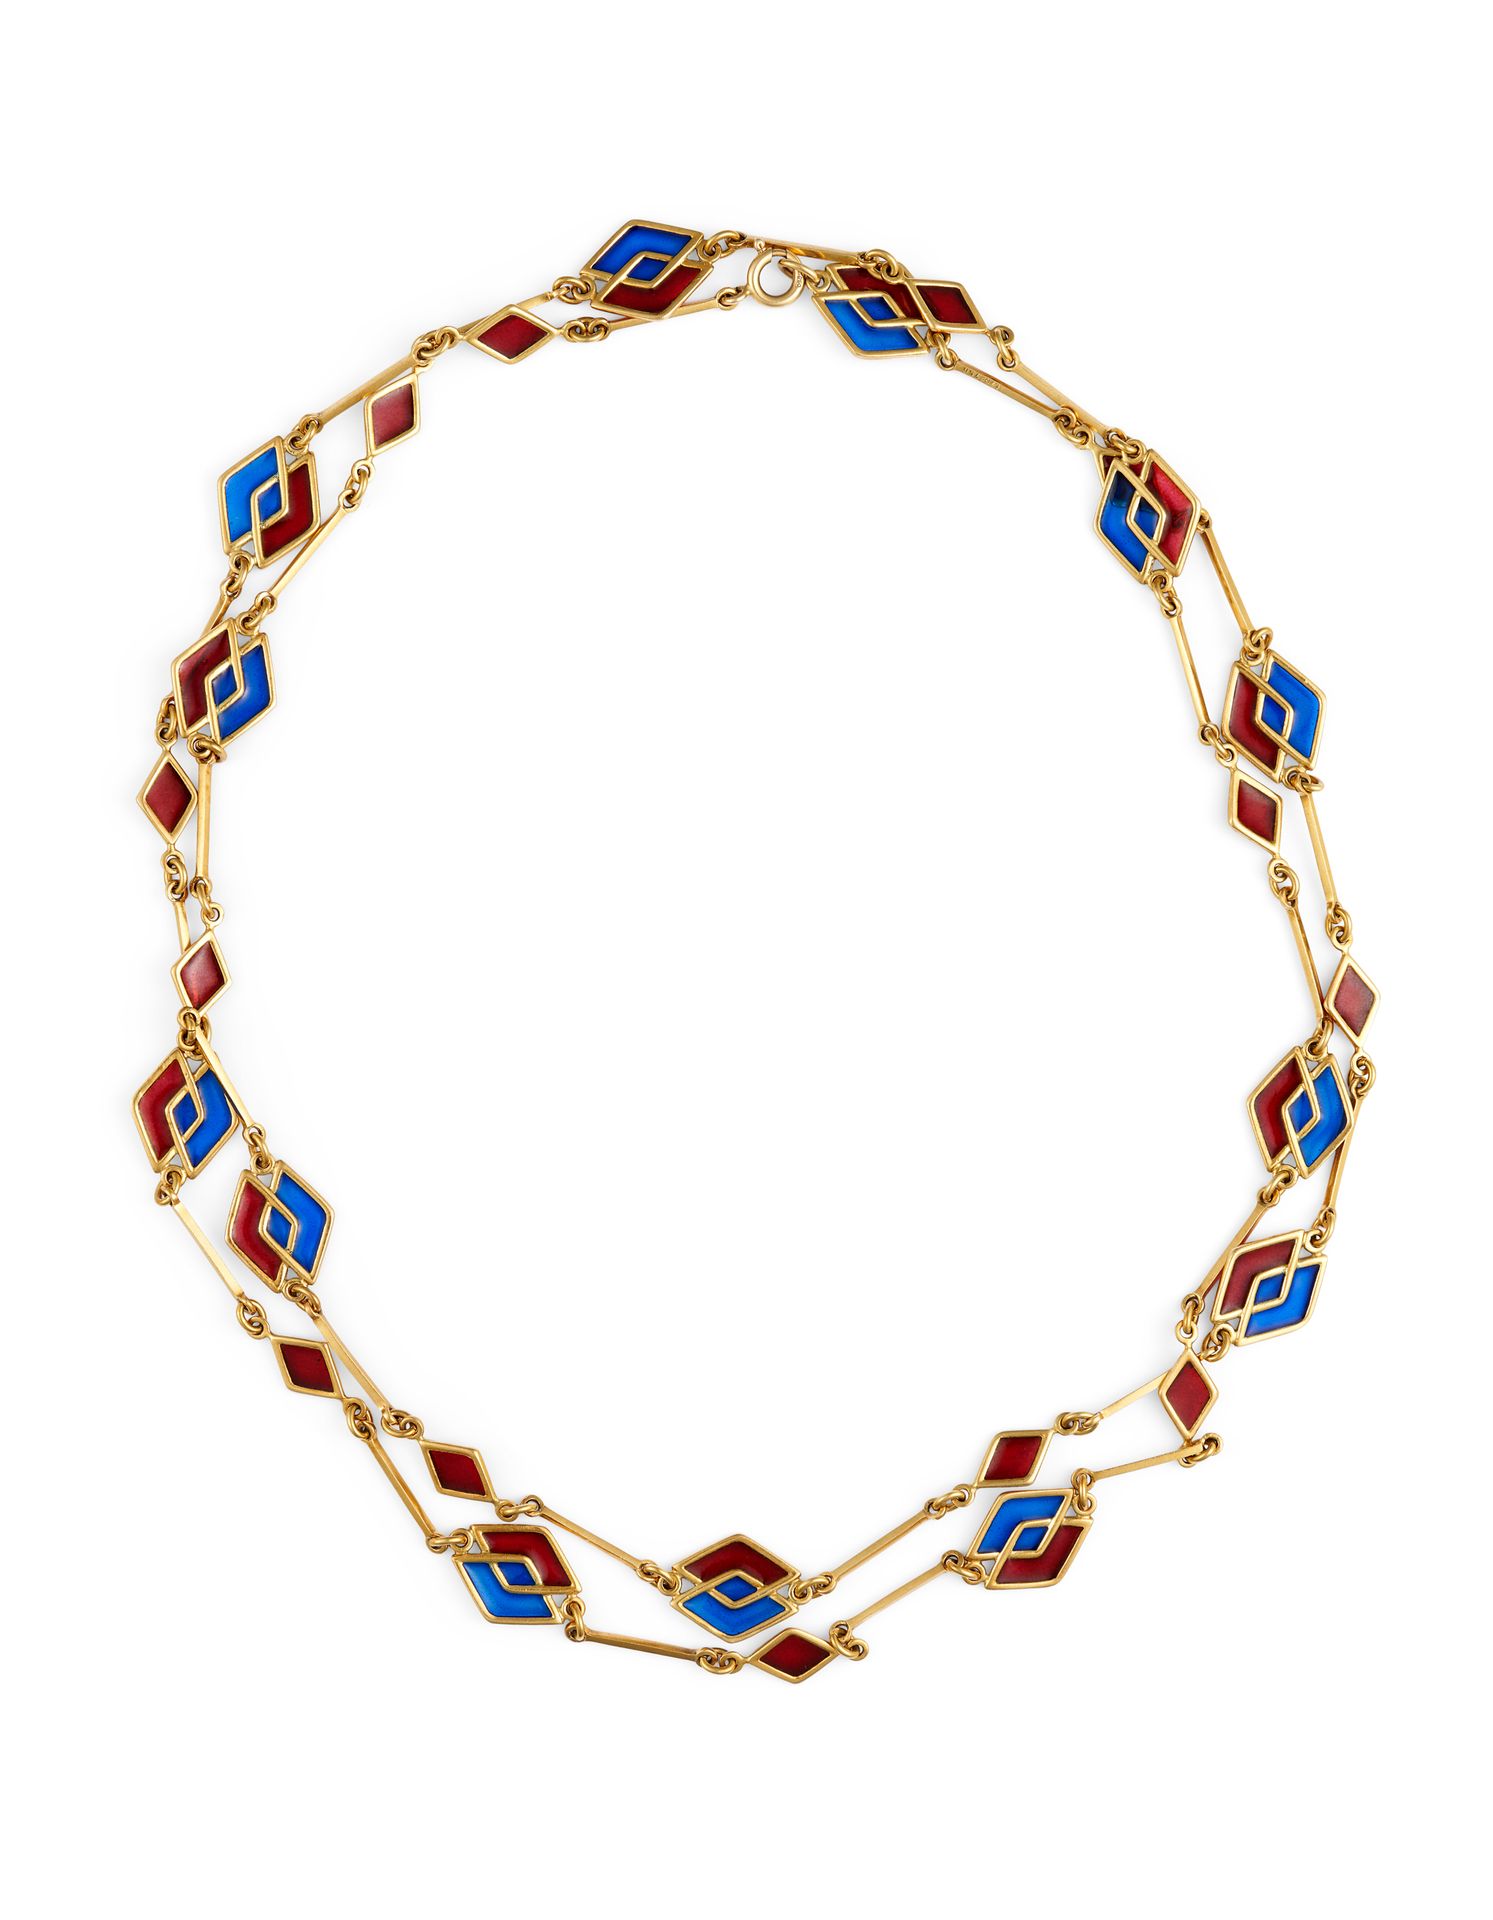 Null 1970年代 长项链 18K黄金，蓝色和红色的日用珐琅图案。

印章。意大利，750，AL 752

尺寸：55厘米 - Tw:52 g